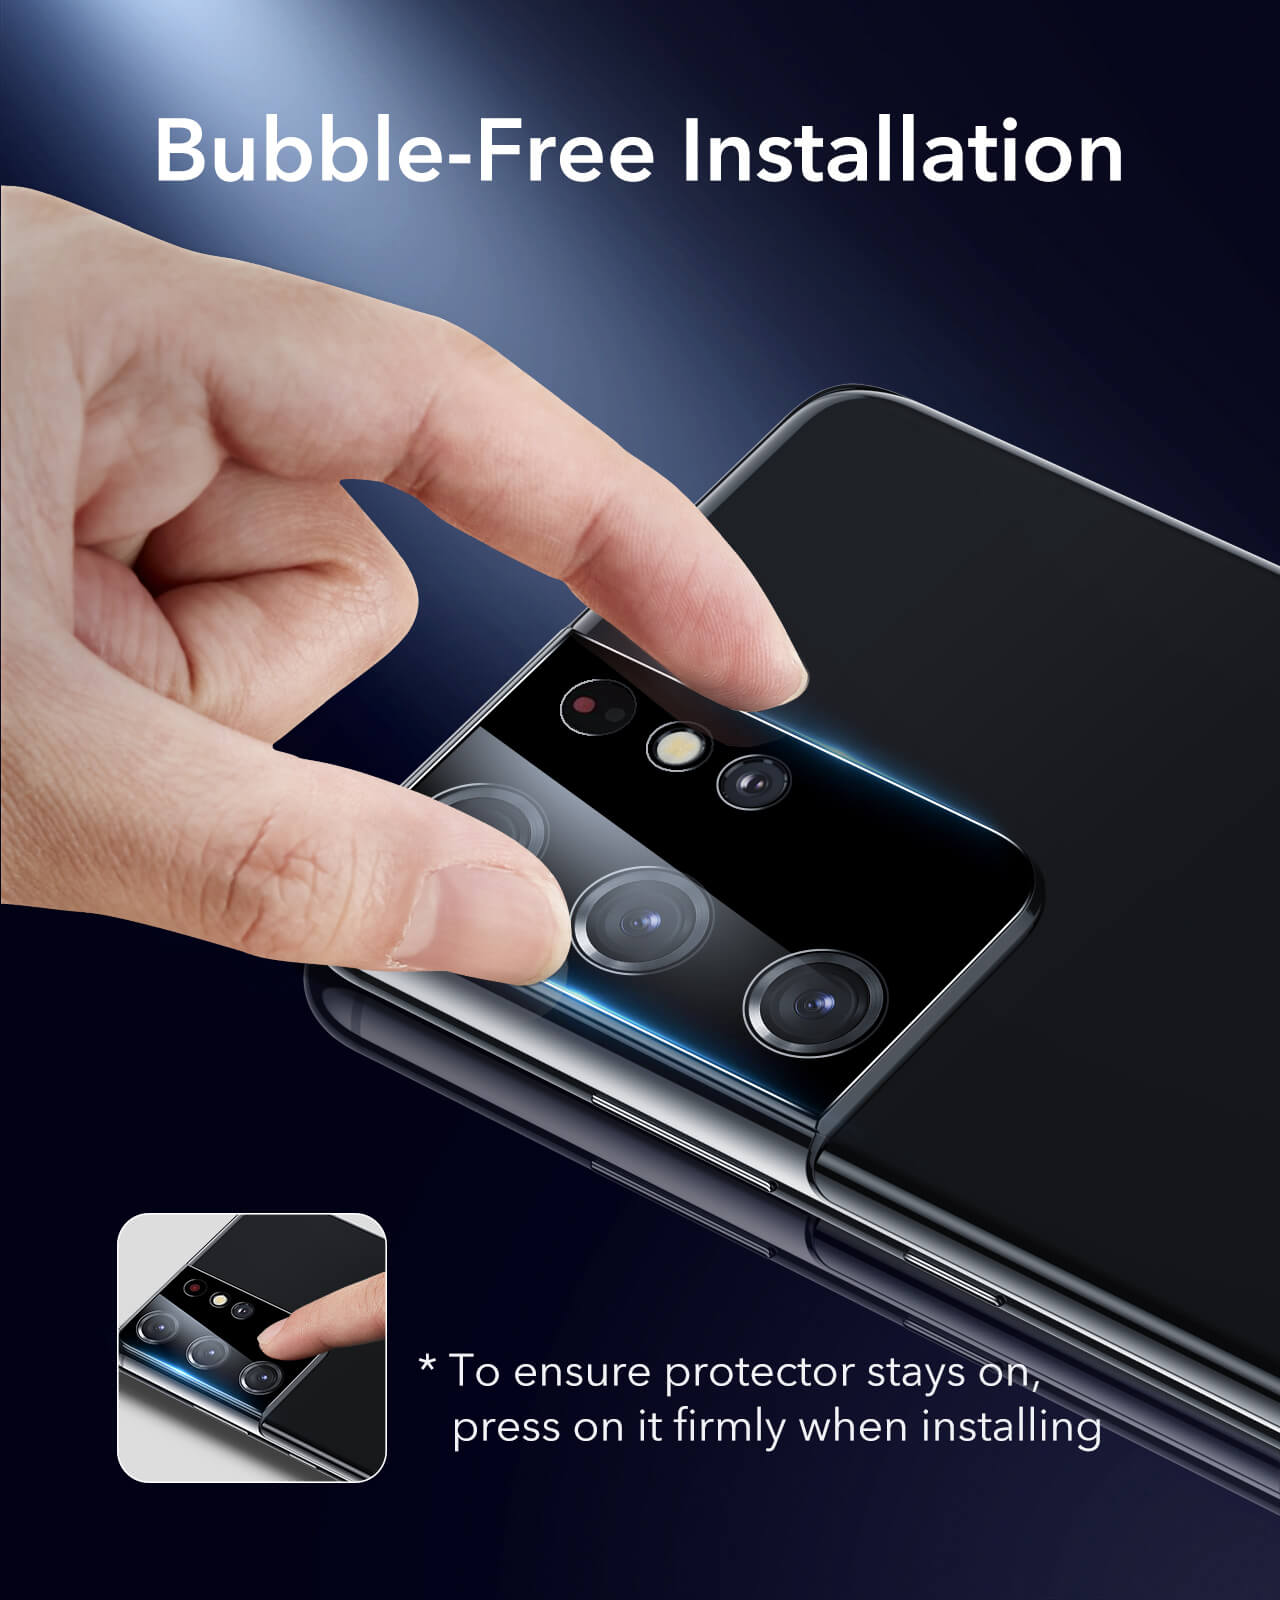 Vitre de protection caméra - Samsung Galaxy S21 Ultra 5G - Acheter sur  PhoneLook